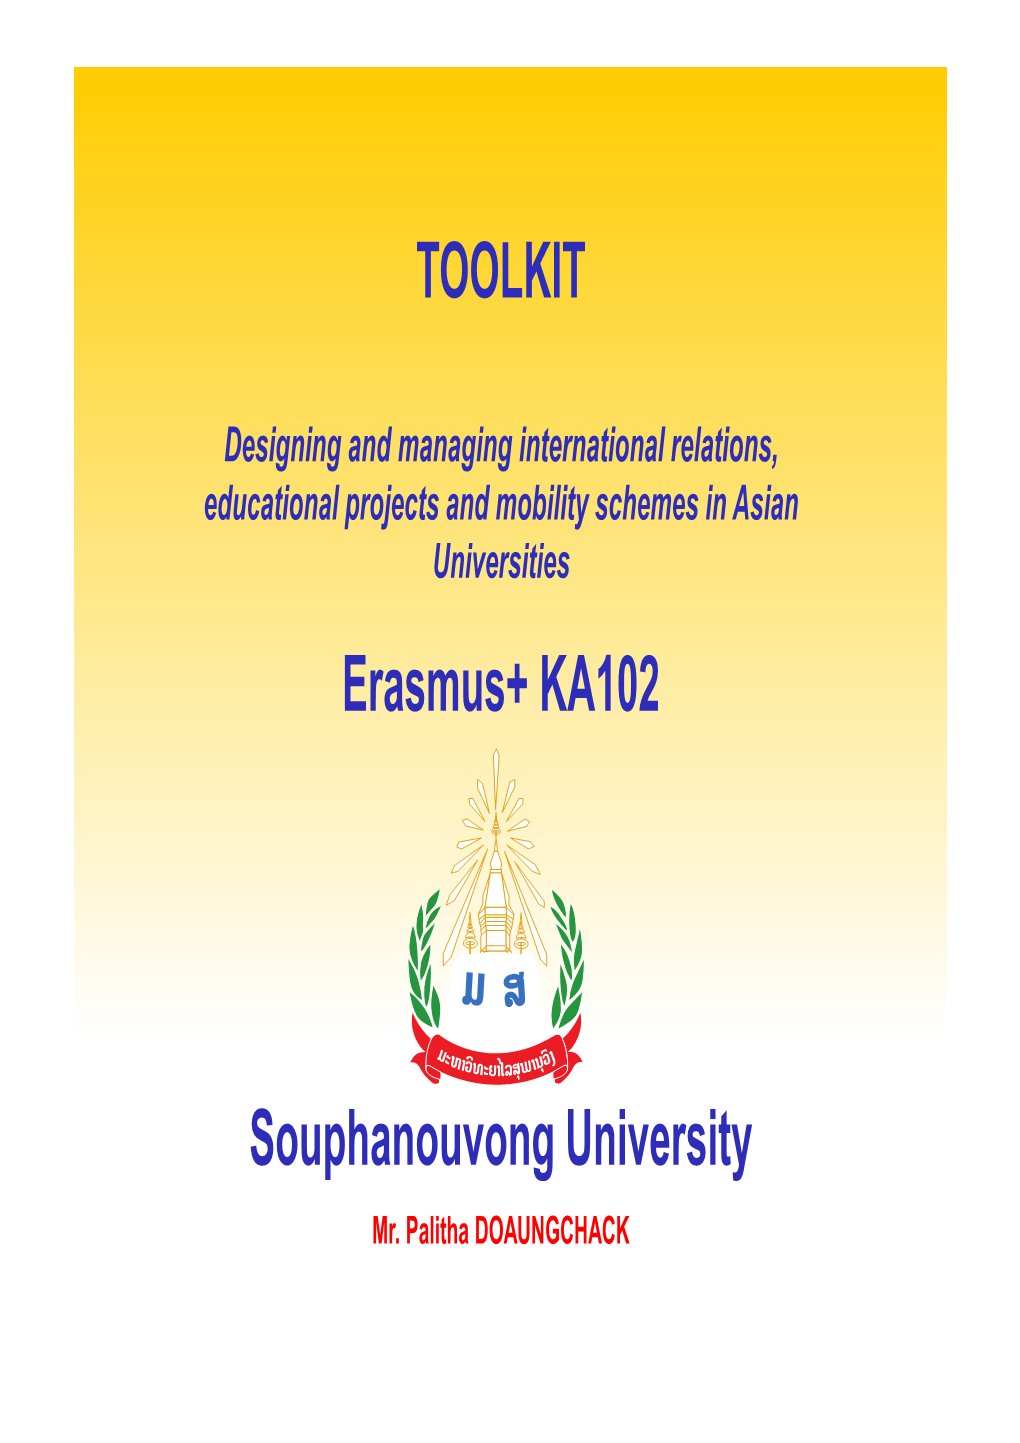 Souphanouvong University Mr